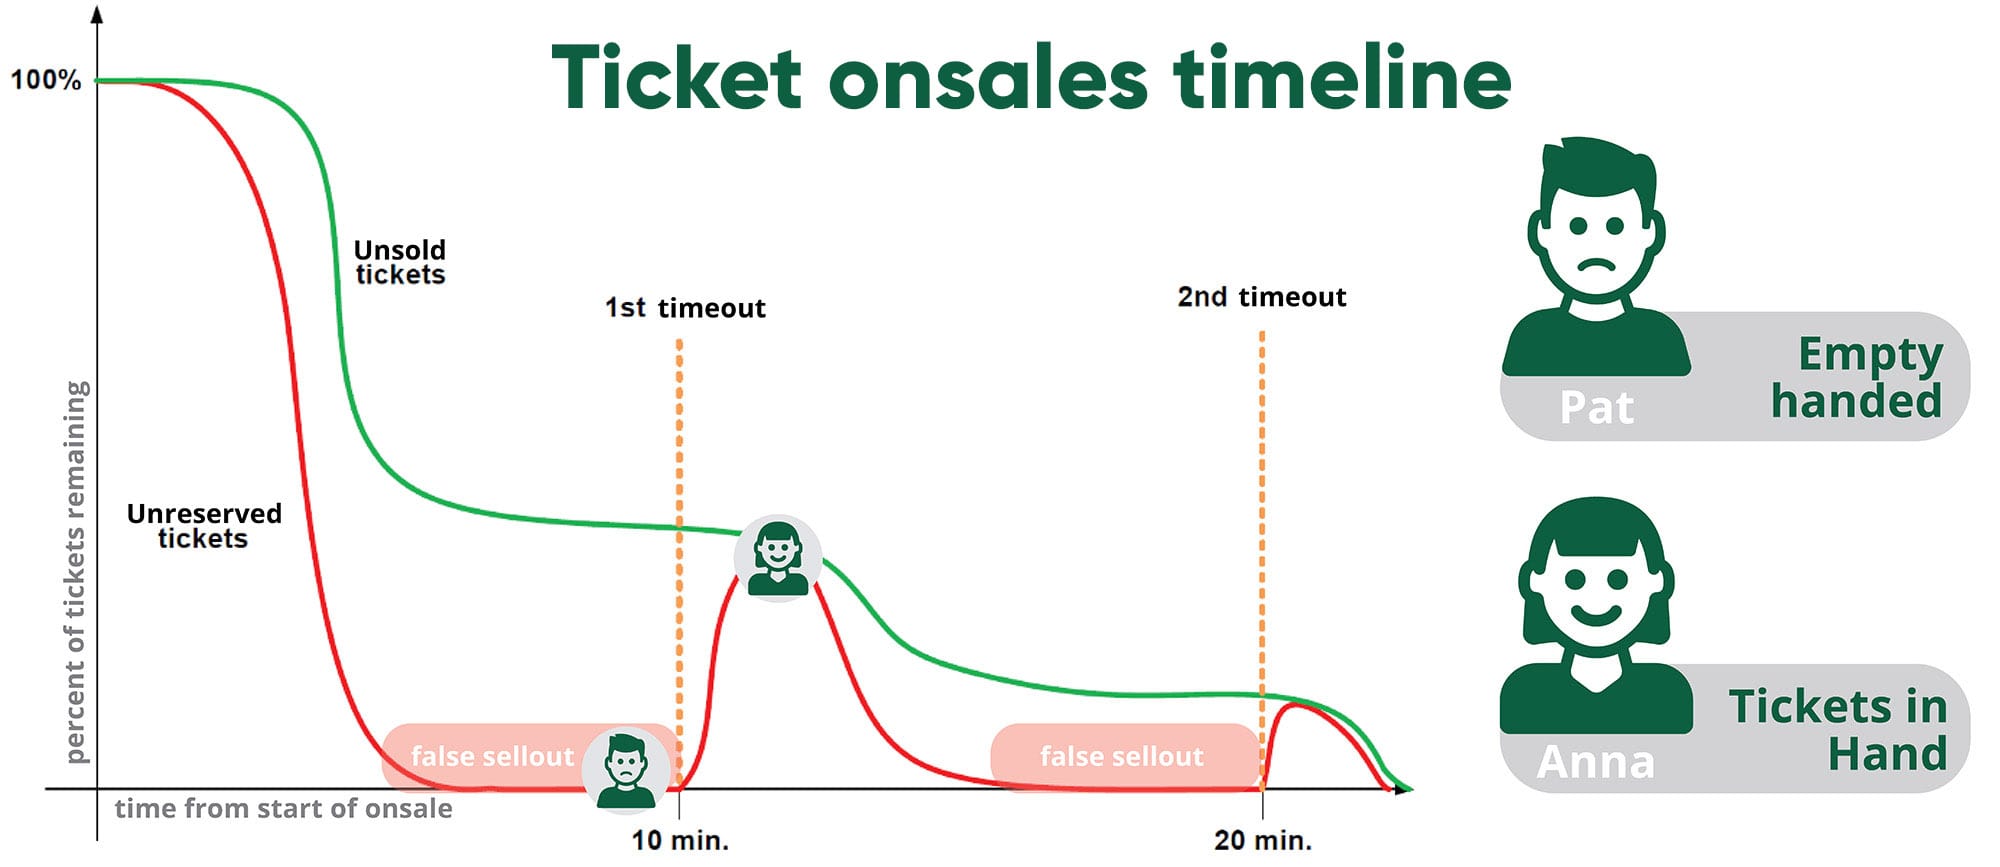 Ticket Onsales Timeline